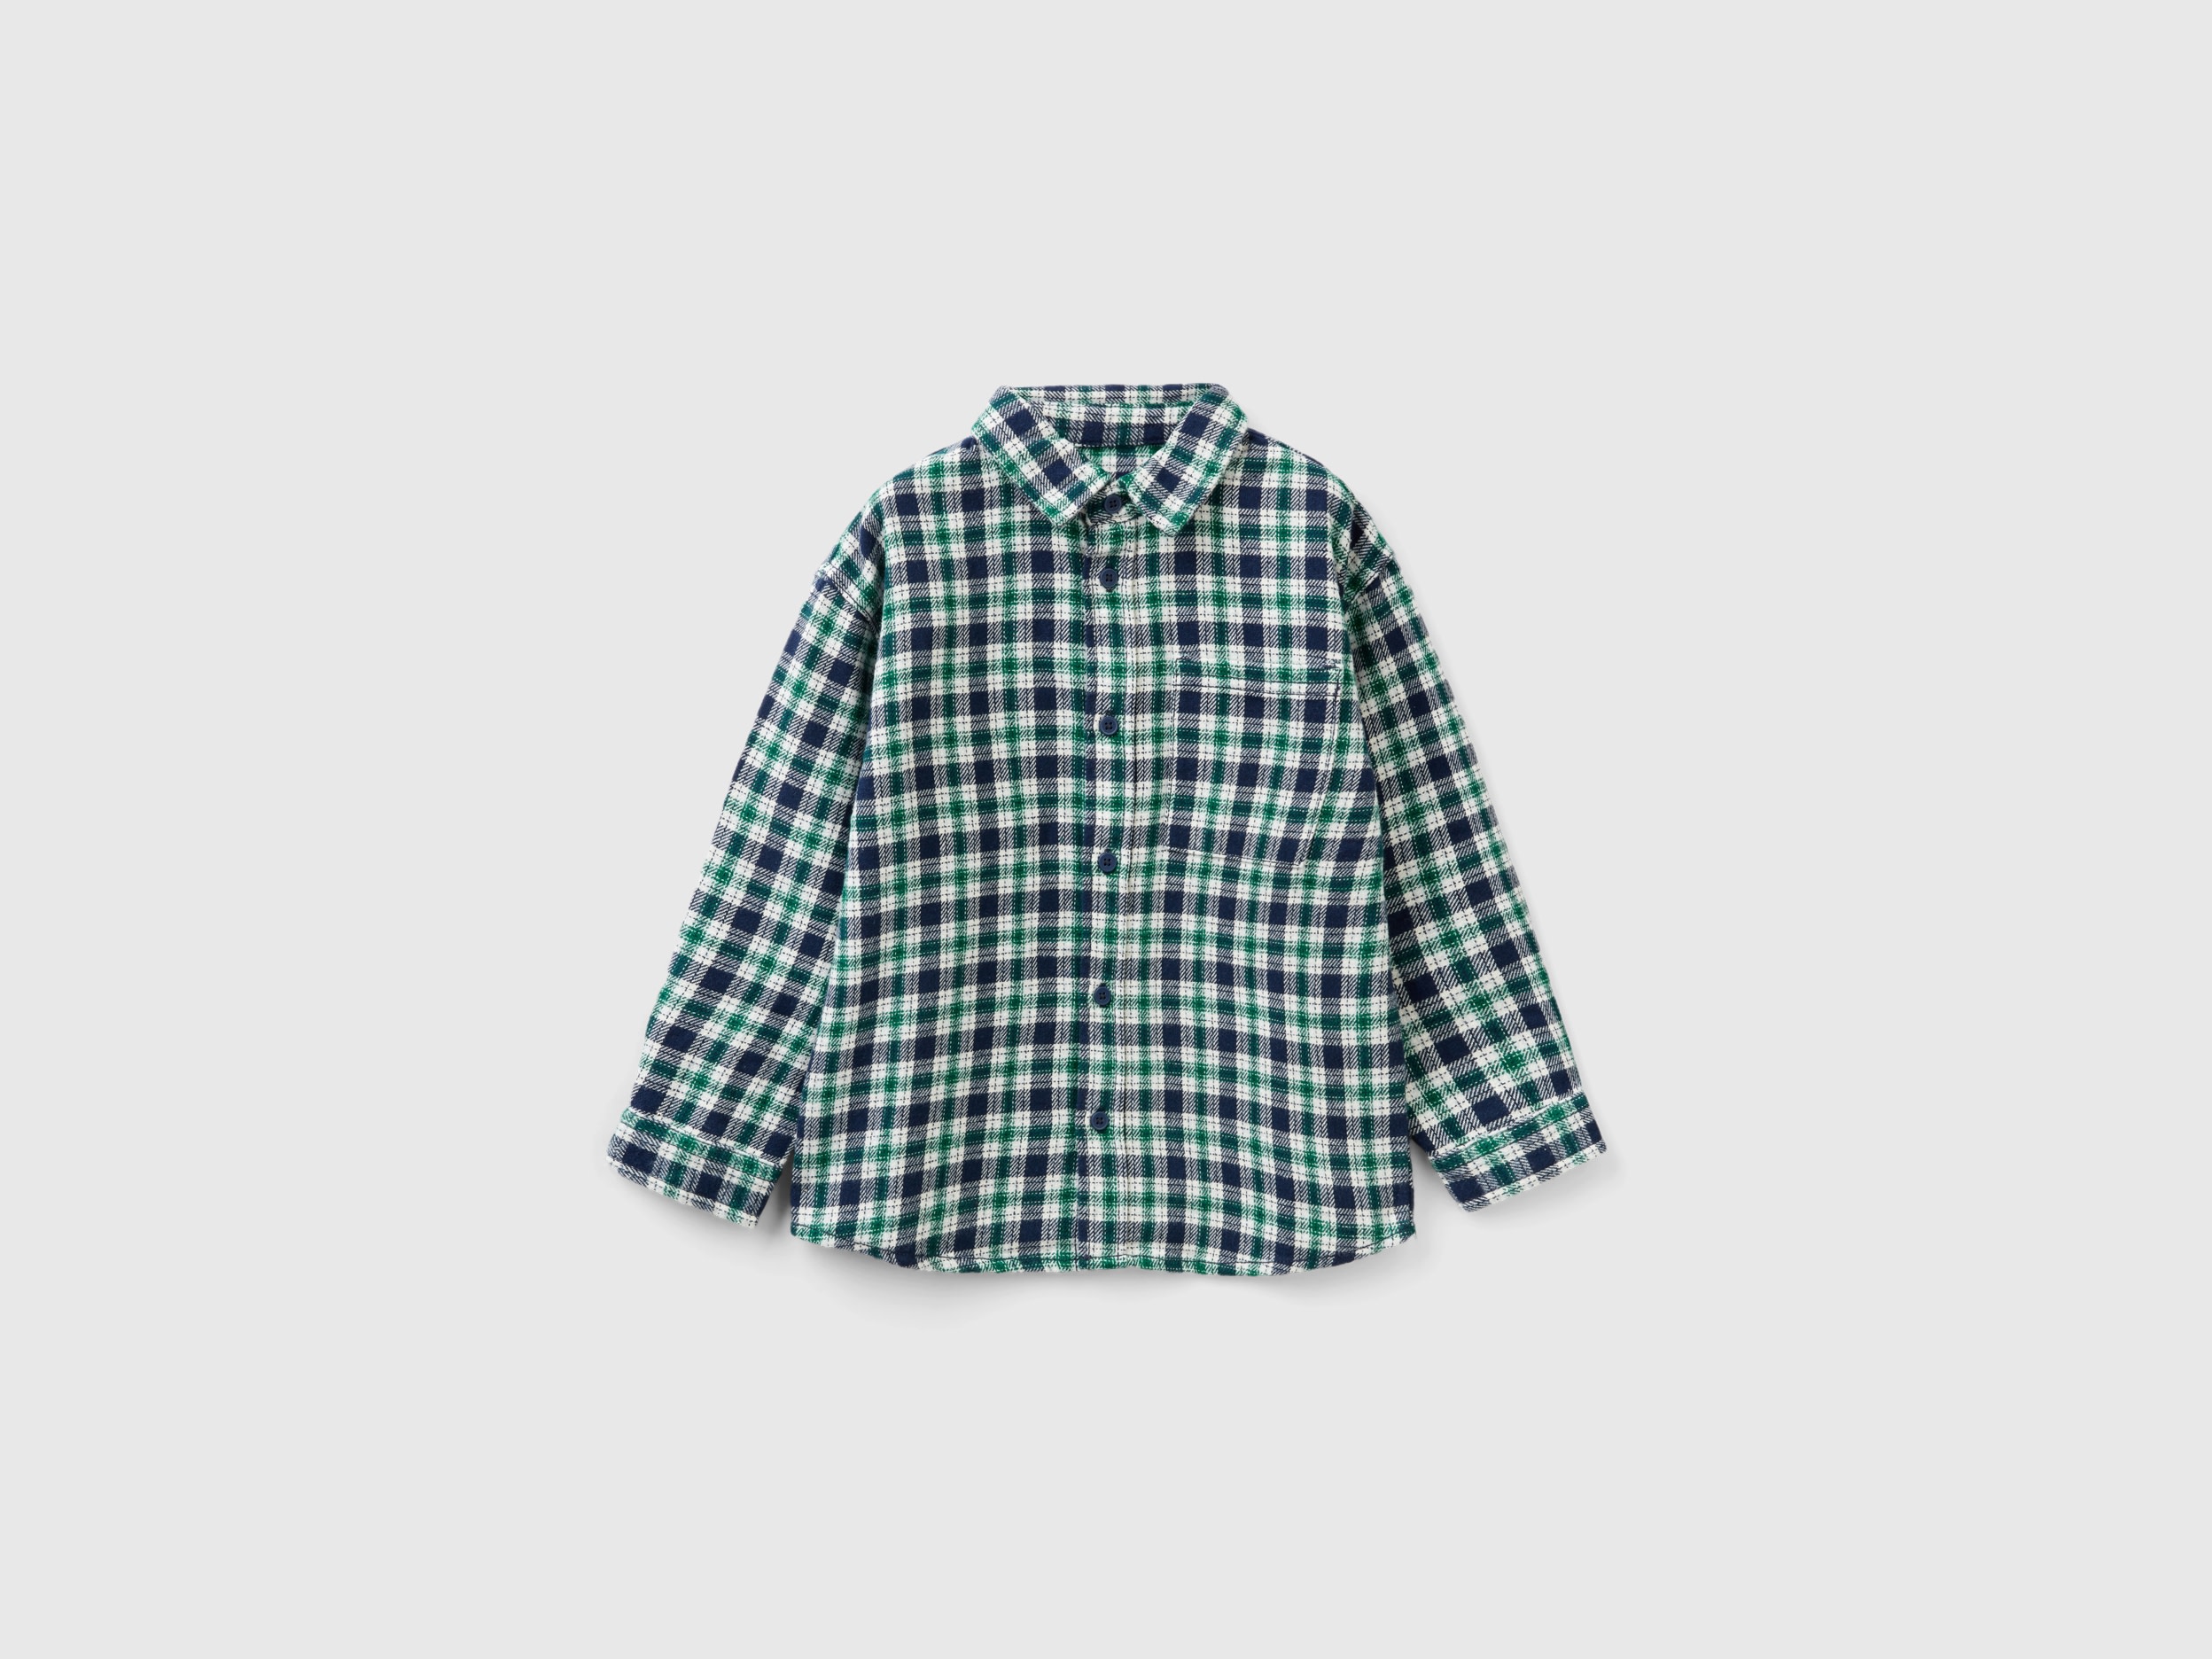 Benetton, Check Flannel Shirt, size 3-4, Multi-color, Kids